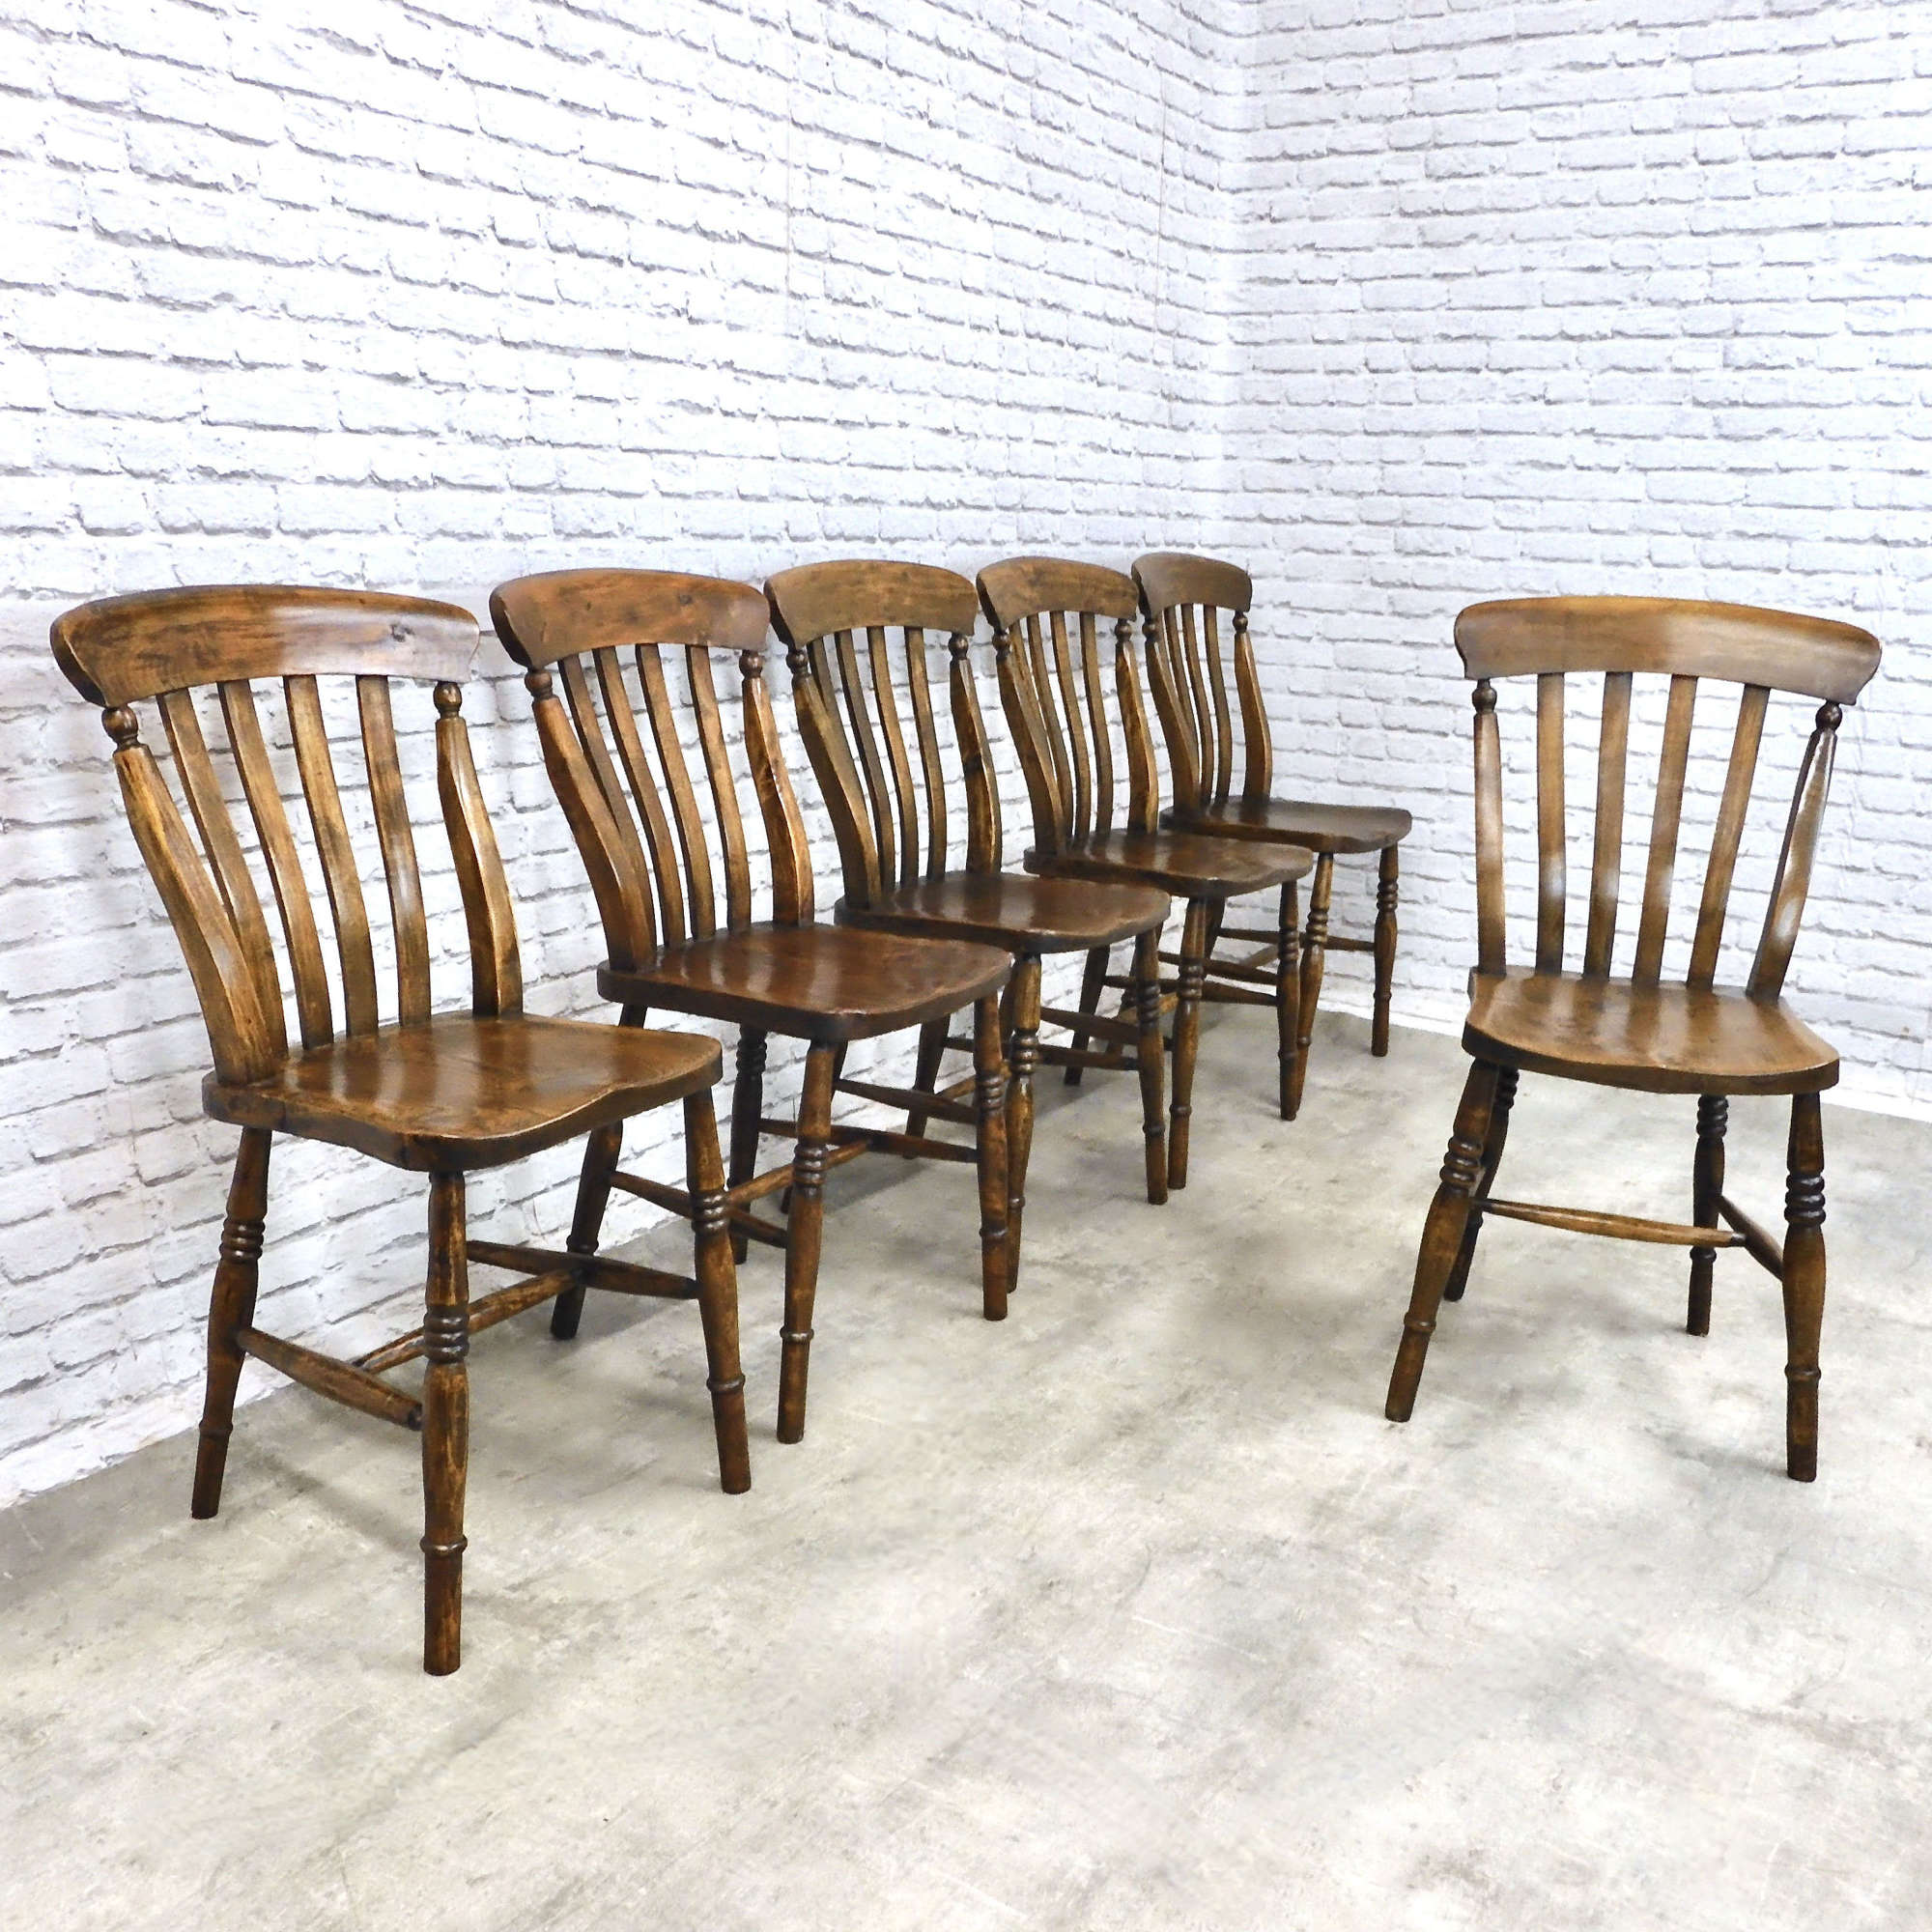 Victorian Windsor Lathback Chairs